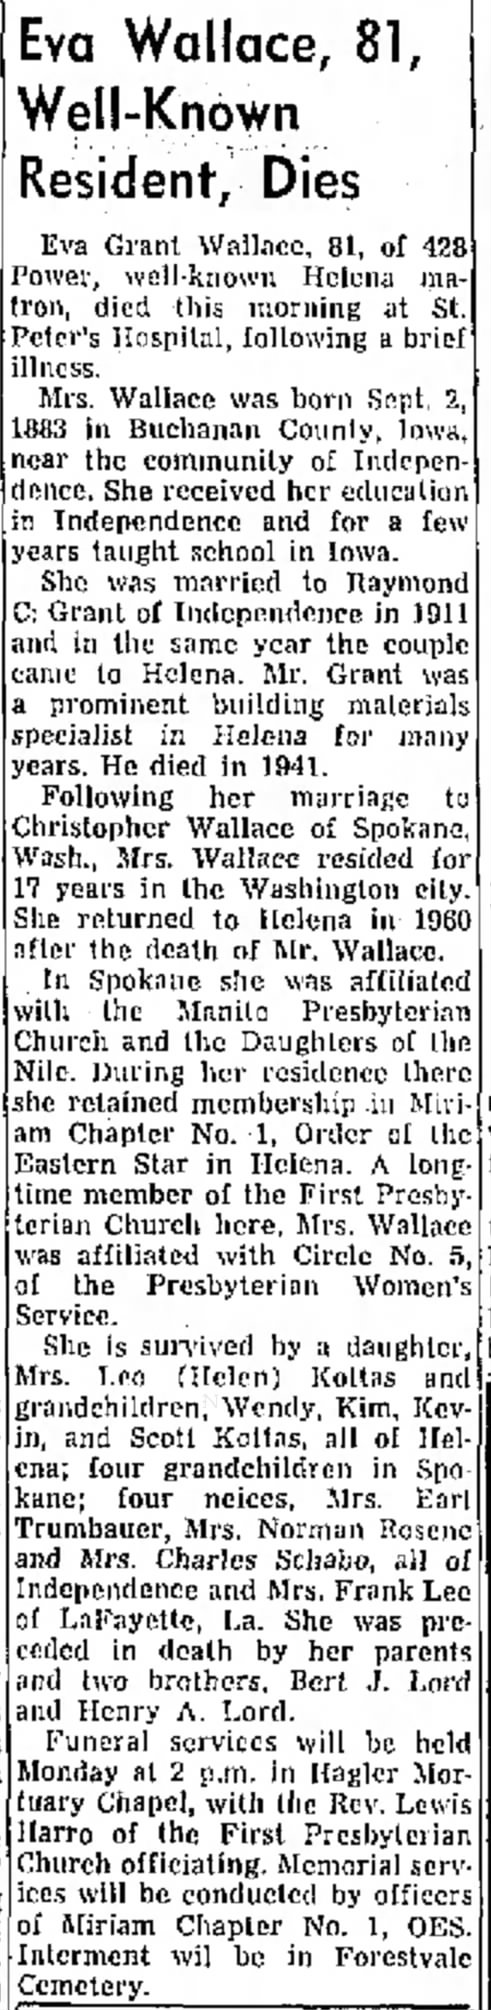 Obituary: Eva Grant Wallace nee Lord